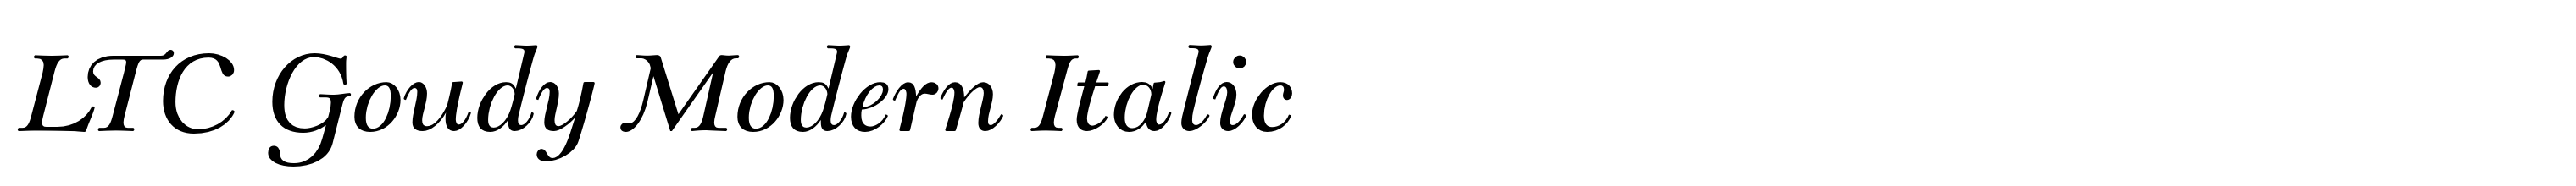 LTC Goudy Modern Italic